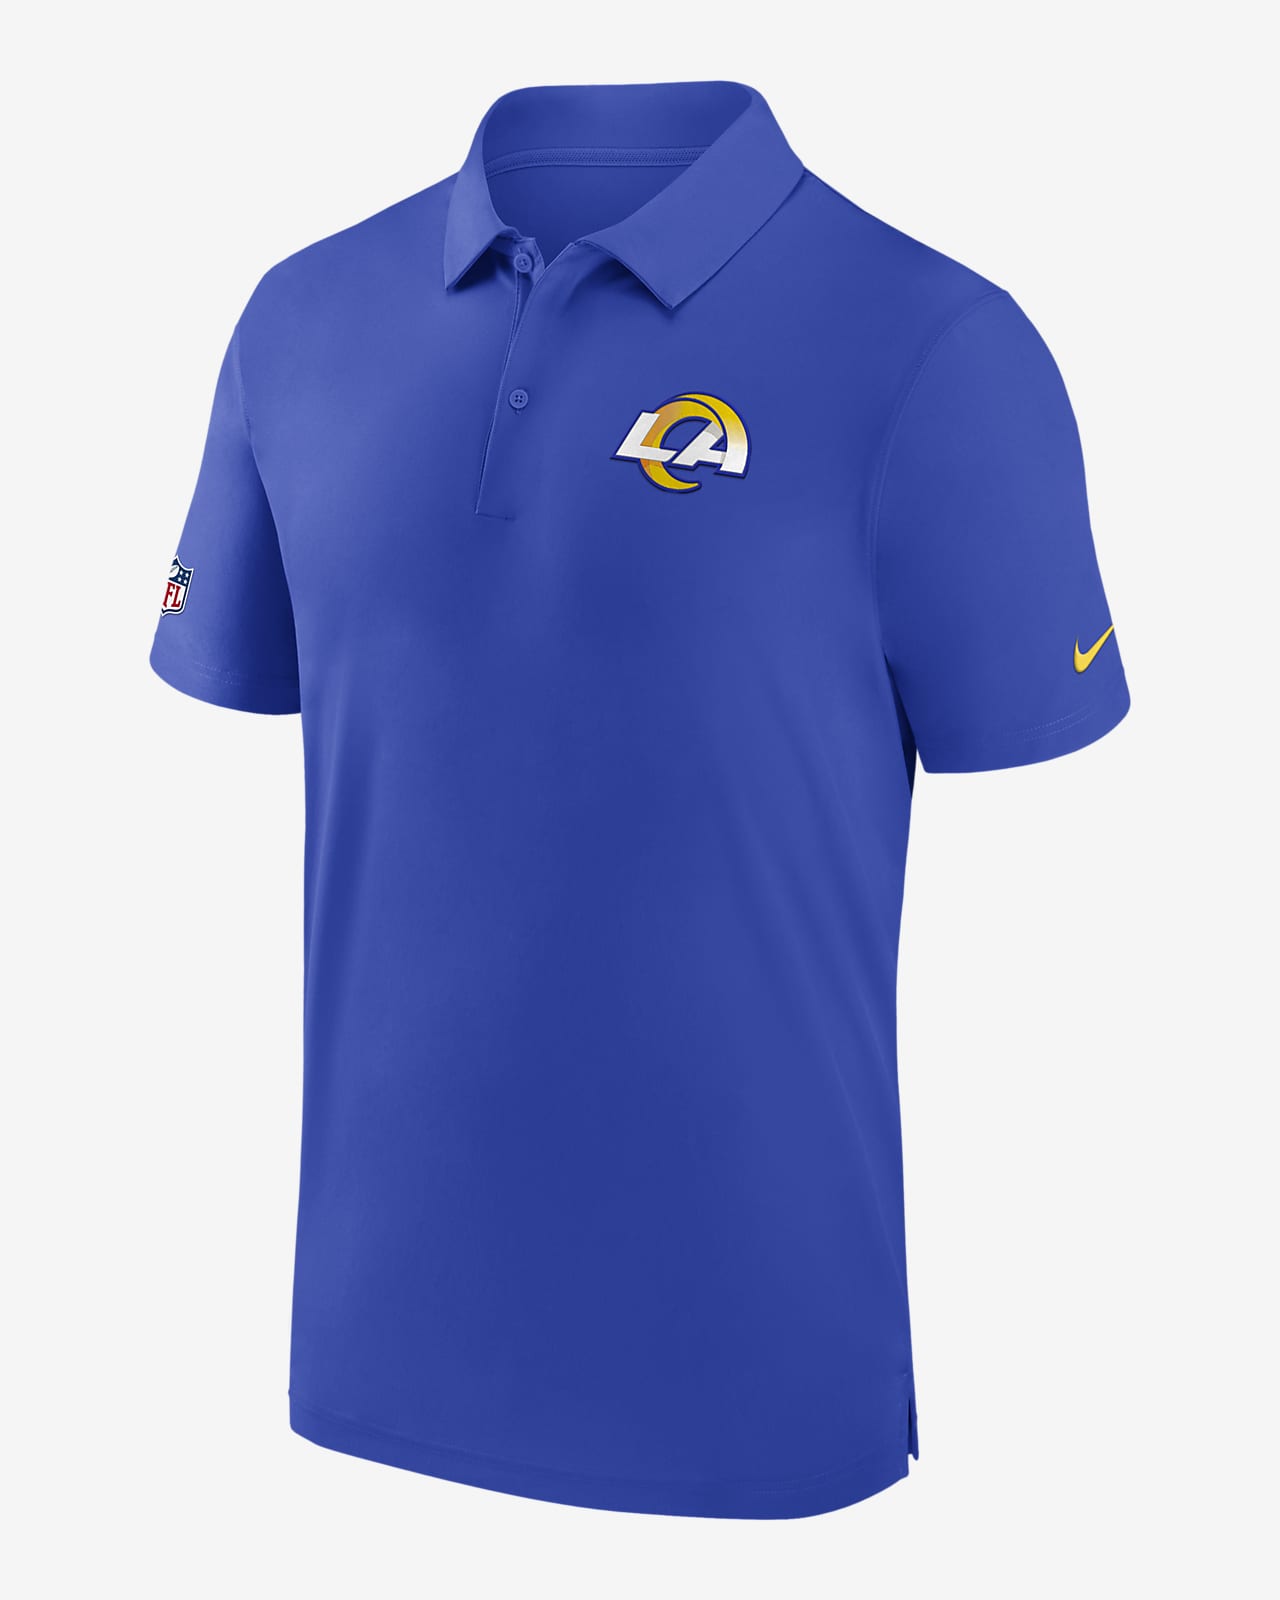 Polo Nike Dri-FIT de la NFL para hombre Los Angeles Rams Sideline Coach